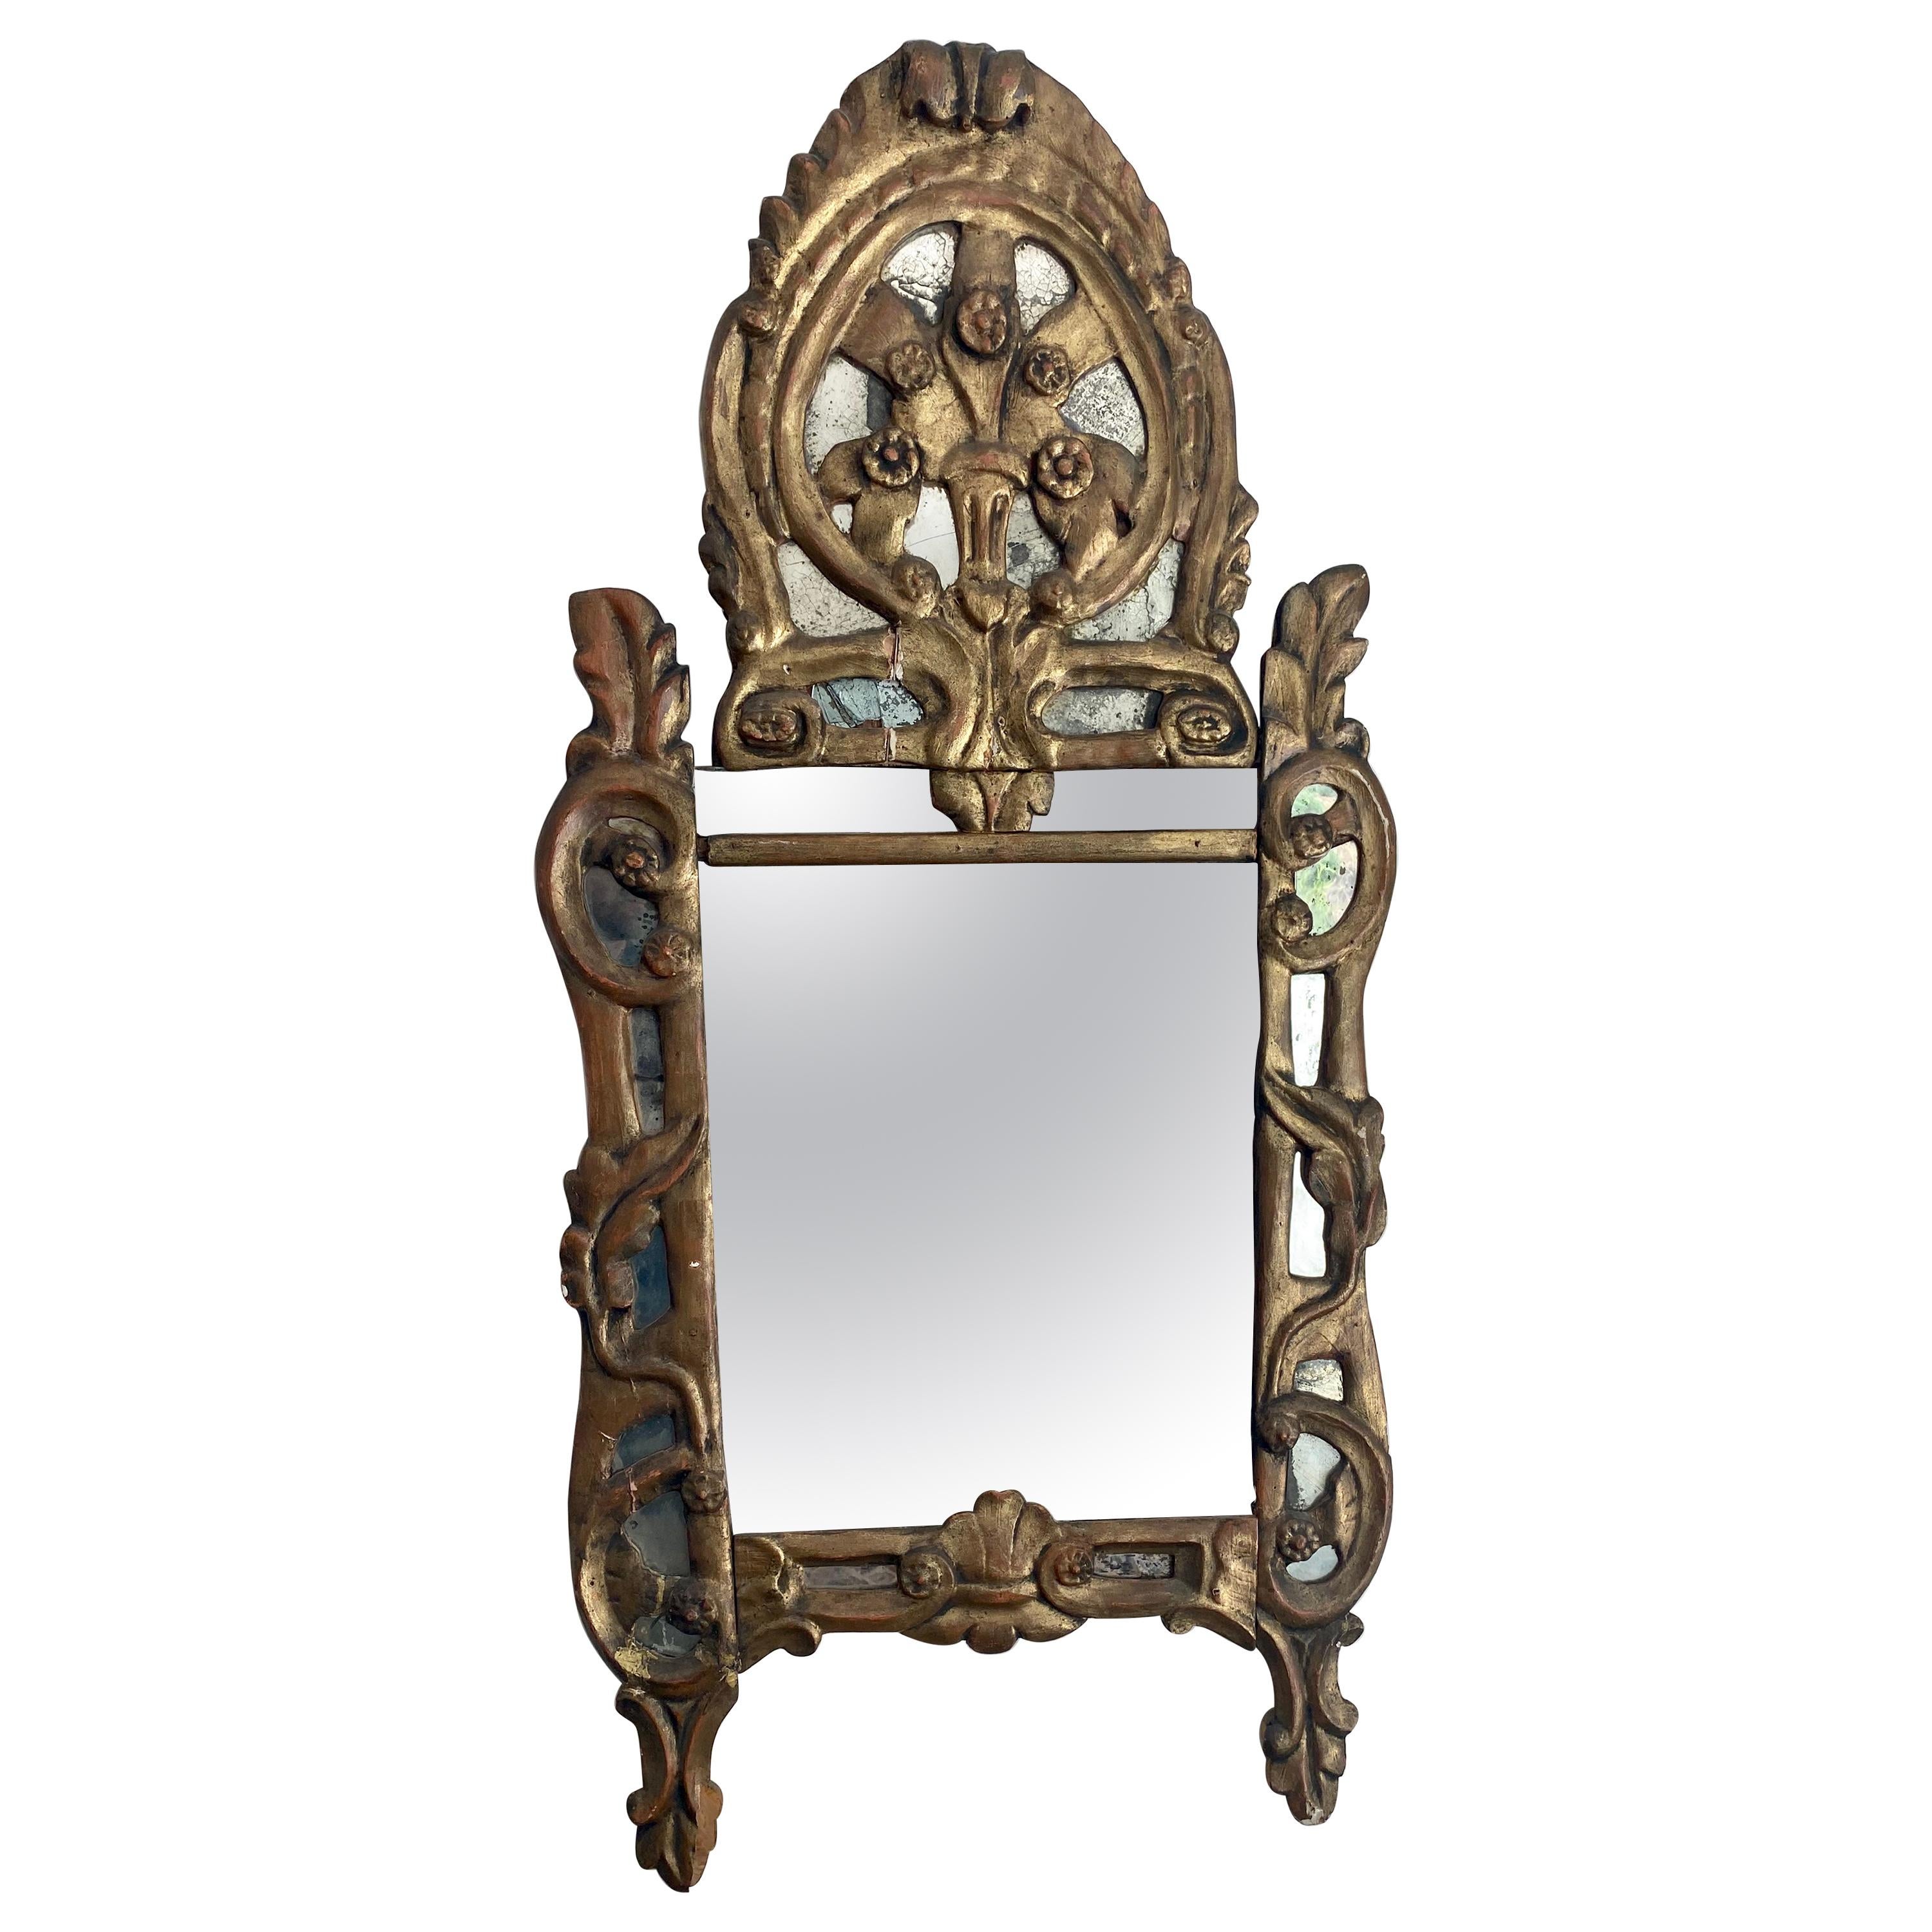 16th Century Italian Mirror with Original Glass and Gilding